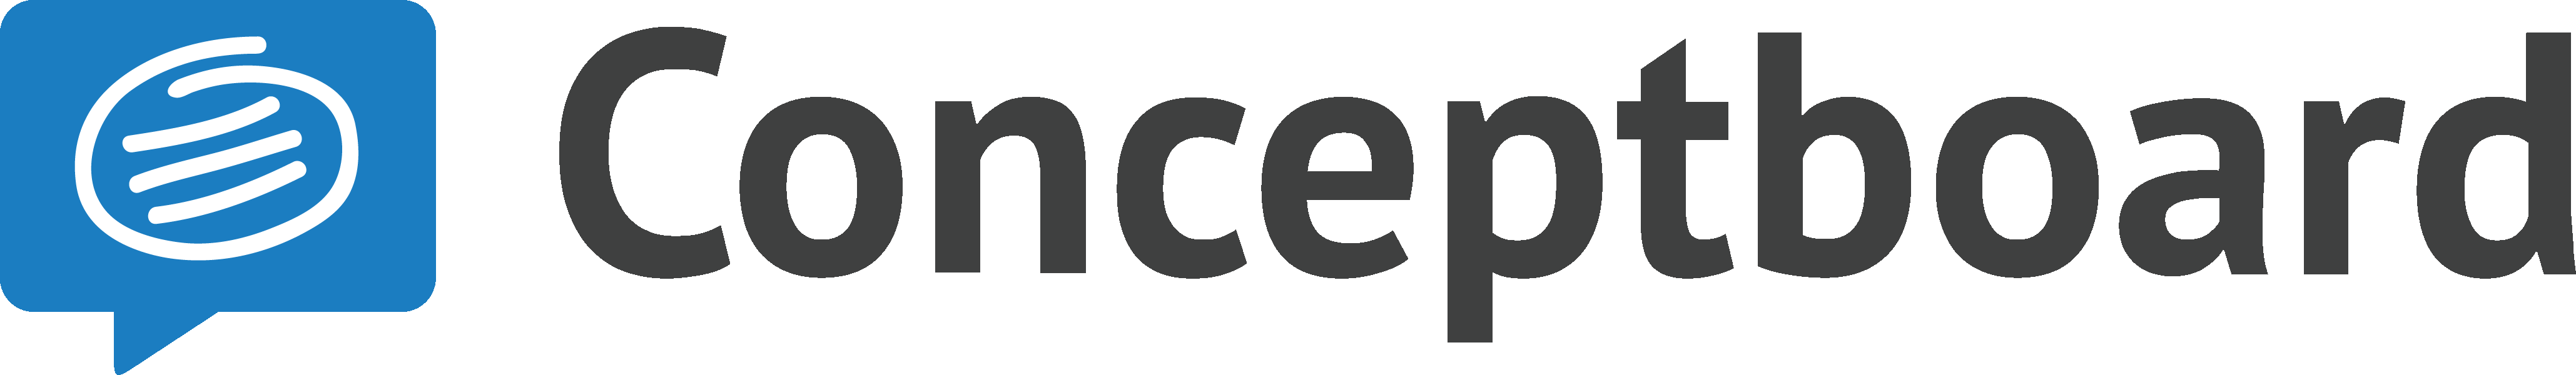 Conceptboard Logo black